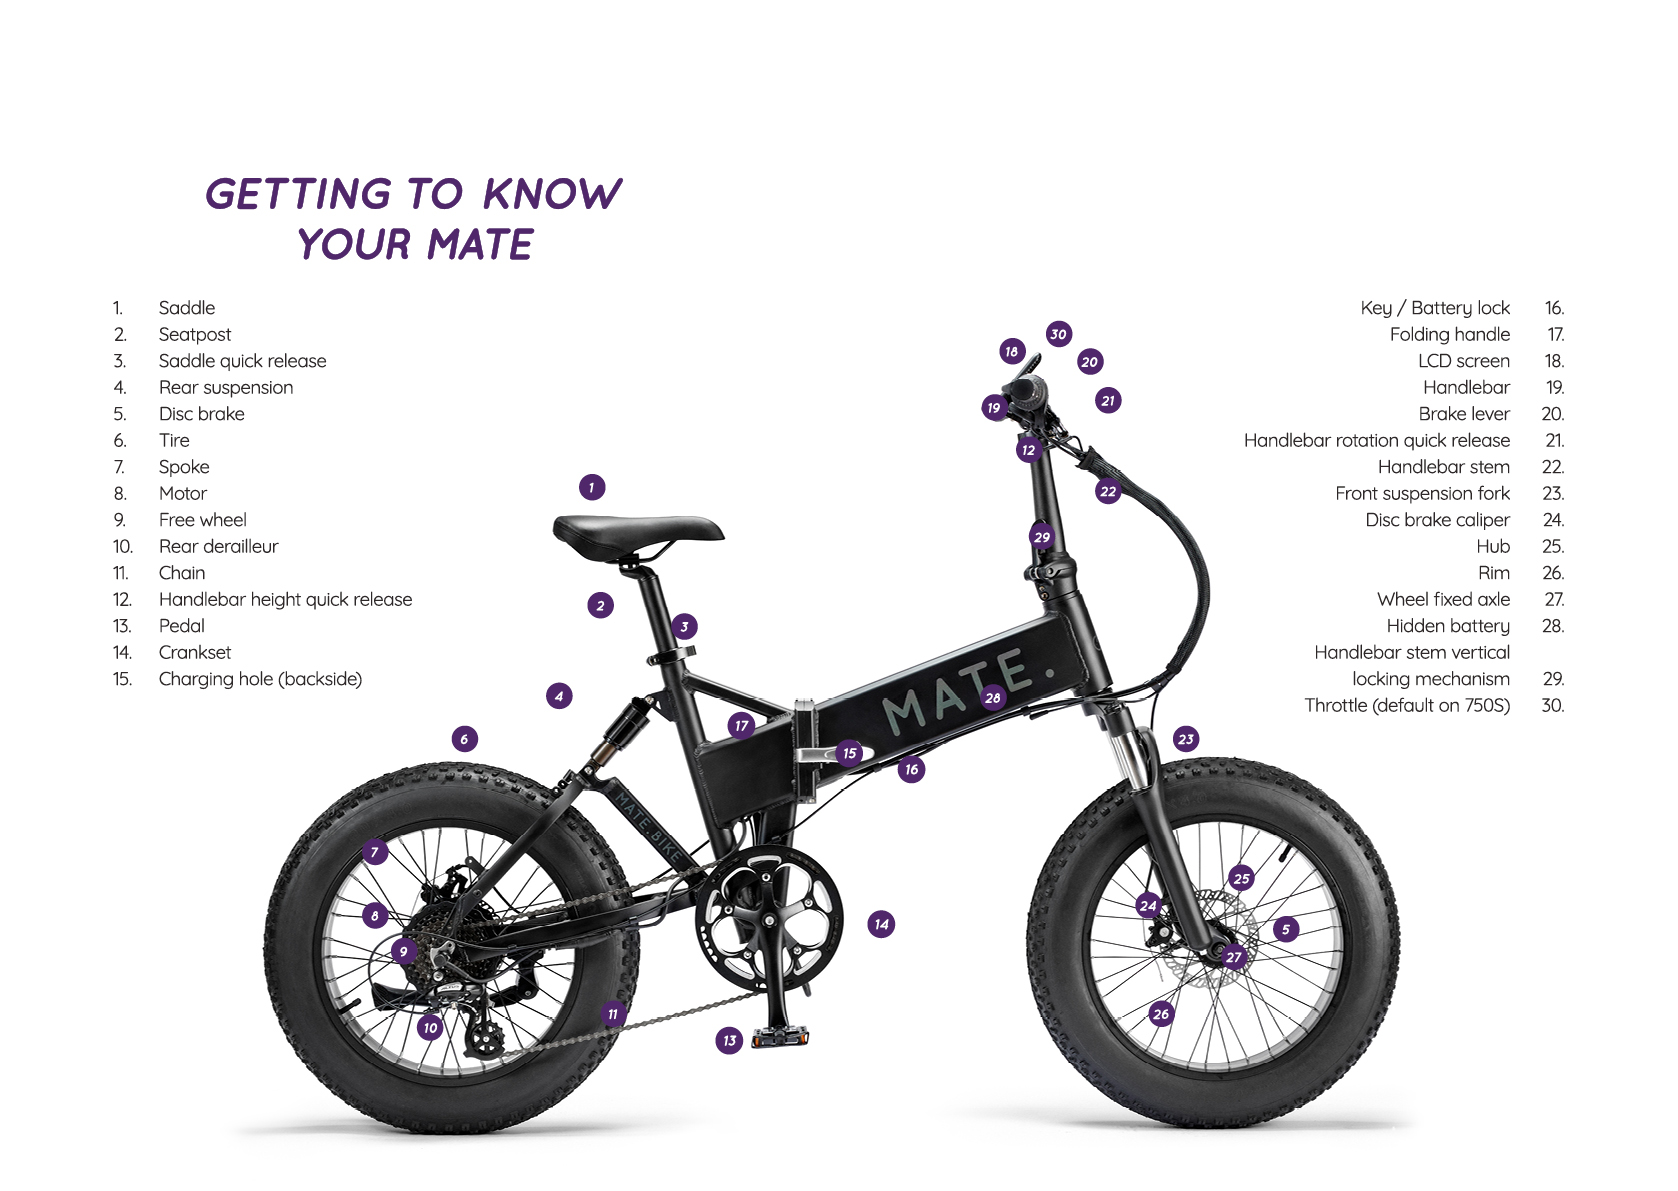 MATE X Info - Mate X Bike ZONE